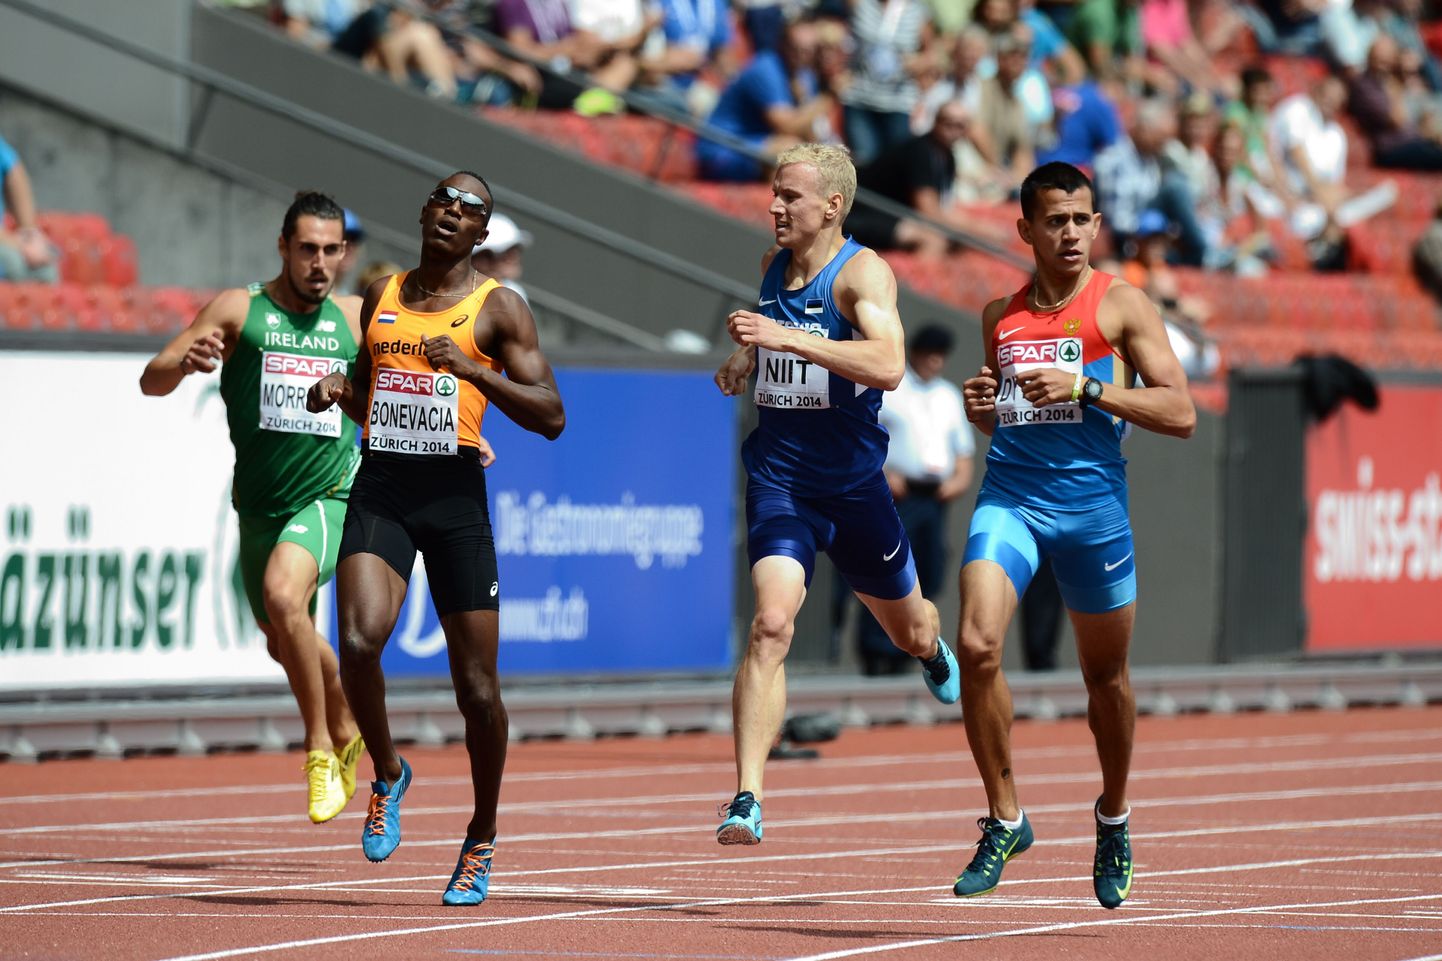 Marek Niit (paremalt teine) püstitas Zürichis Eesti rekordi 400 m jooksus.